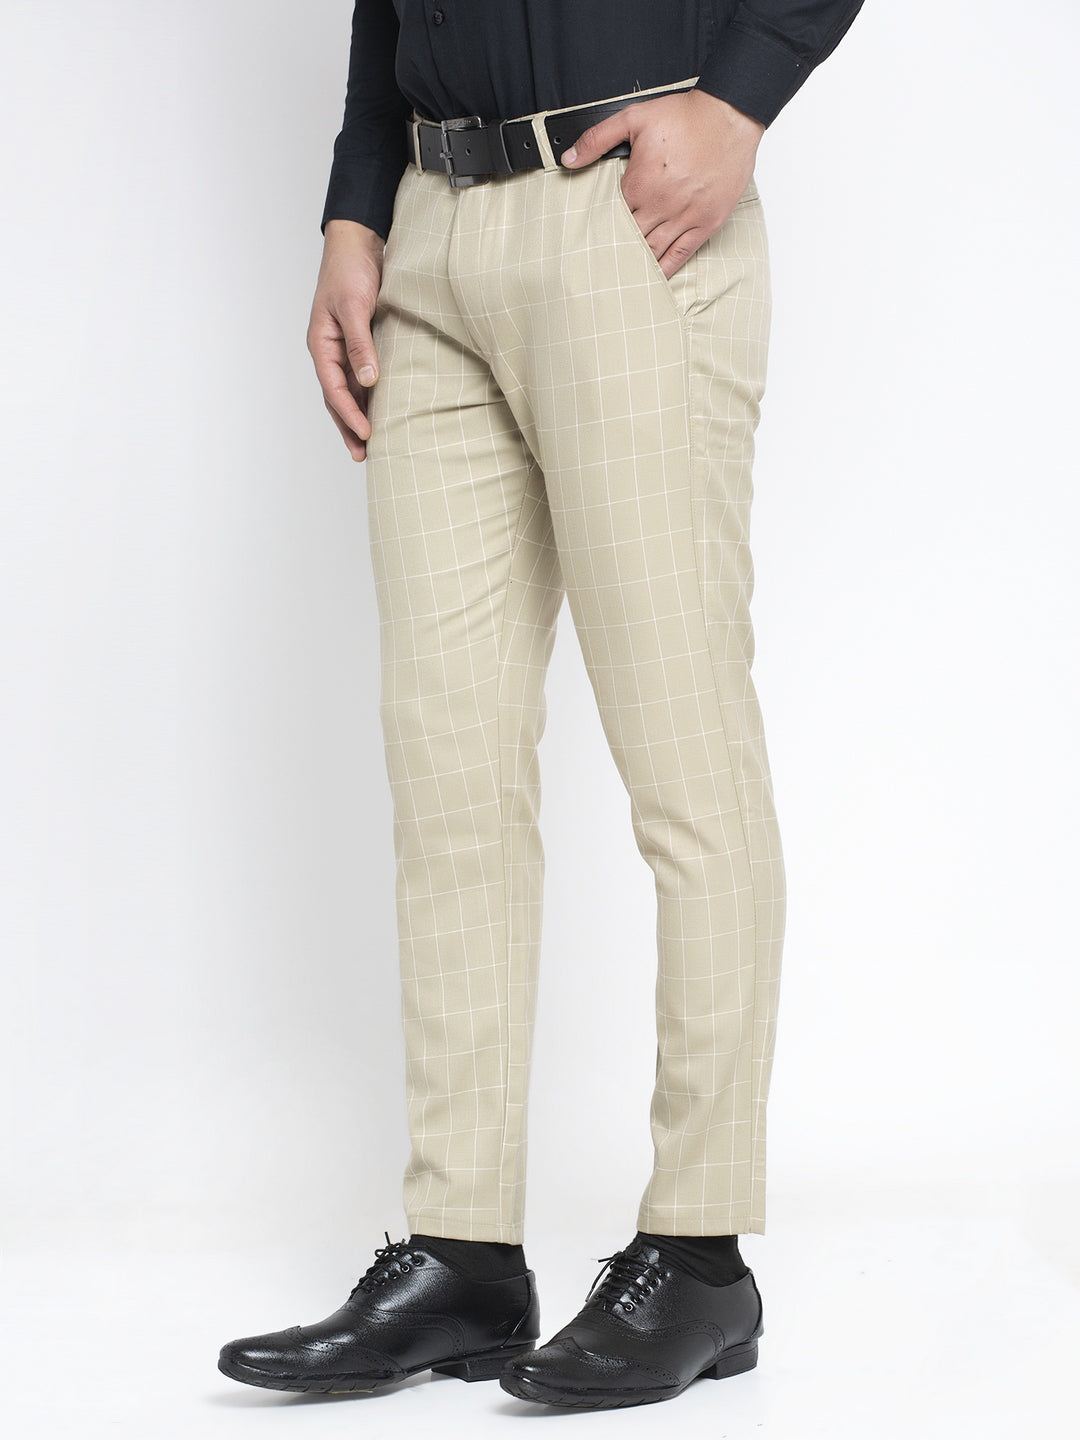 Buy Premium Trouser For Men Online | Iconic India – Iconic India